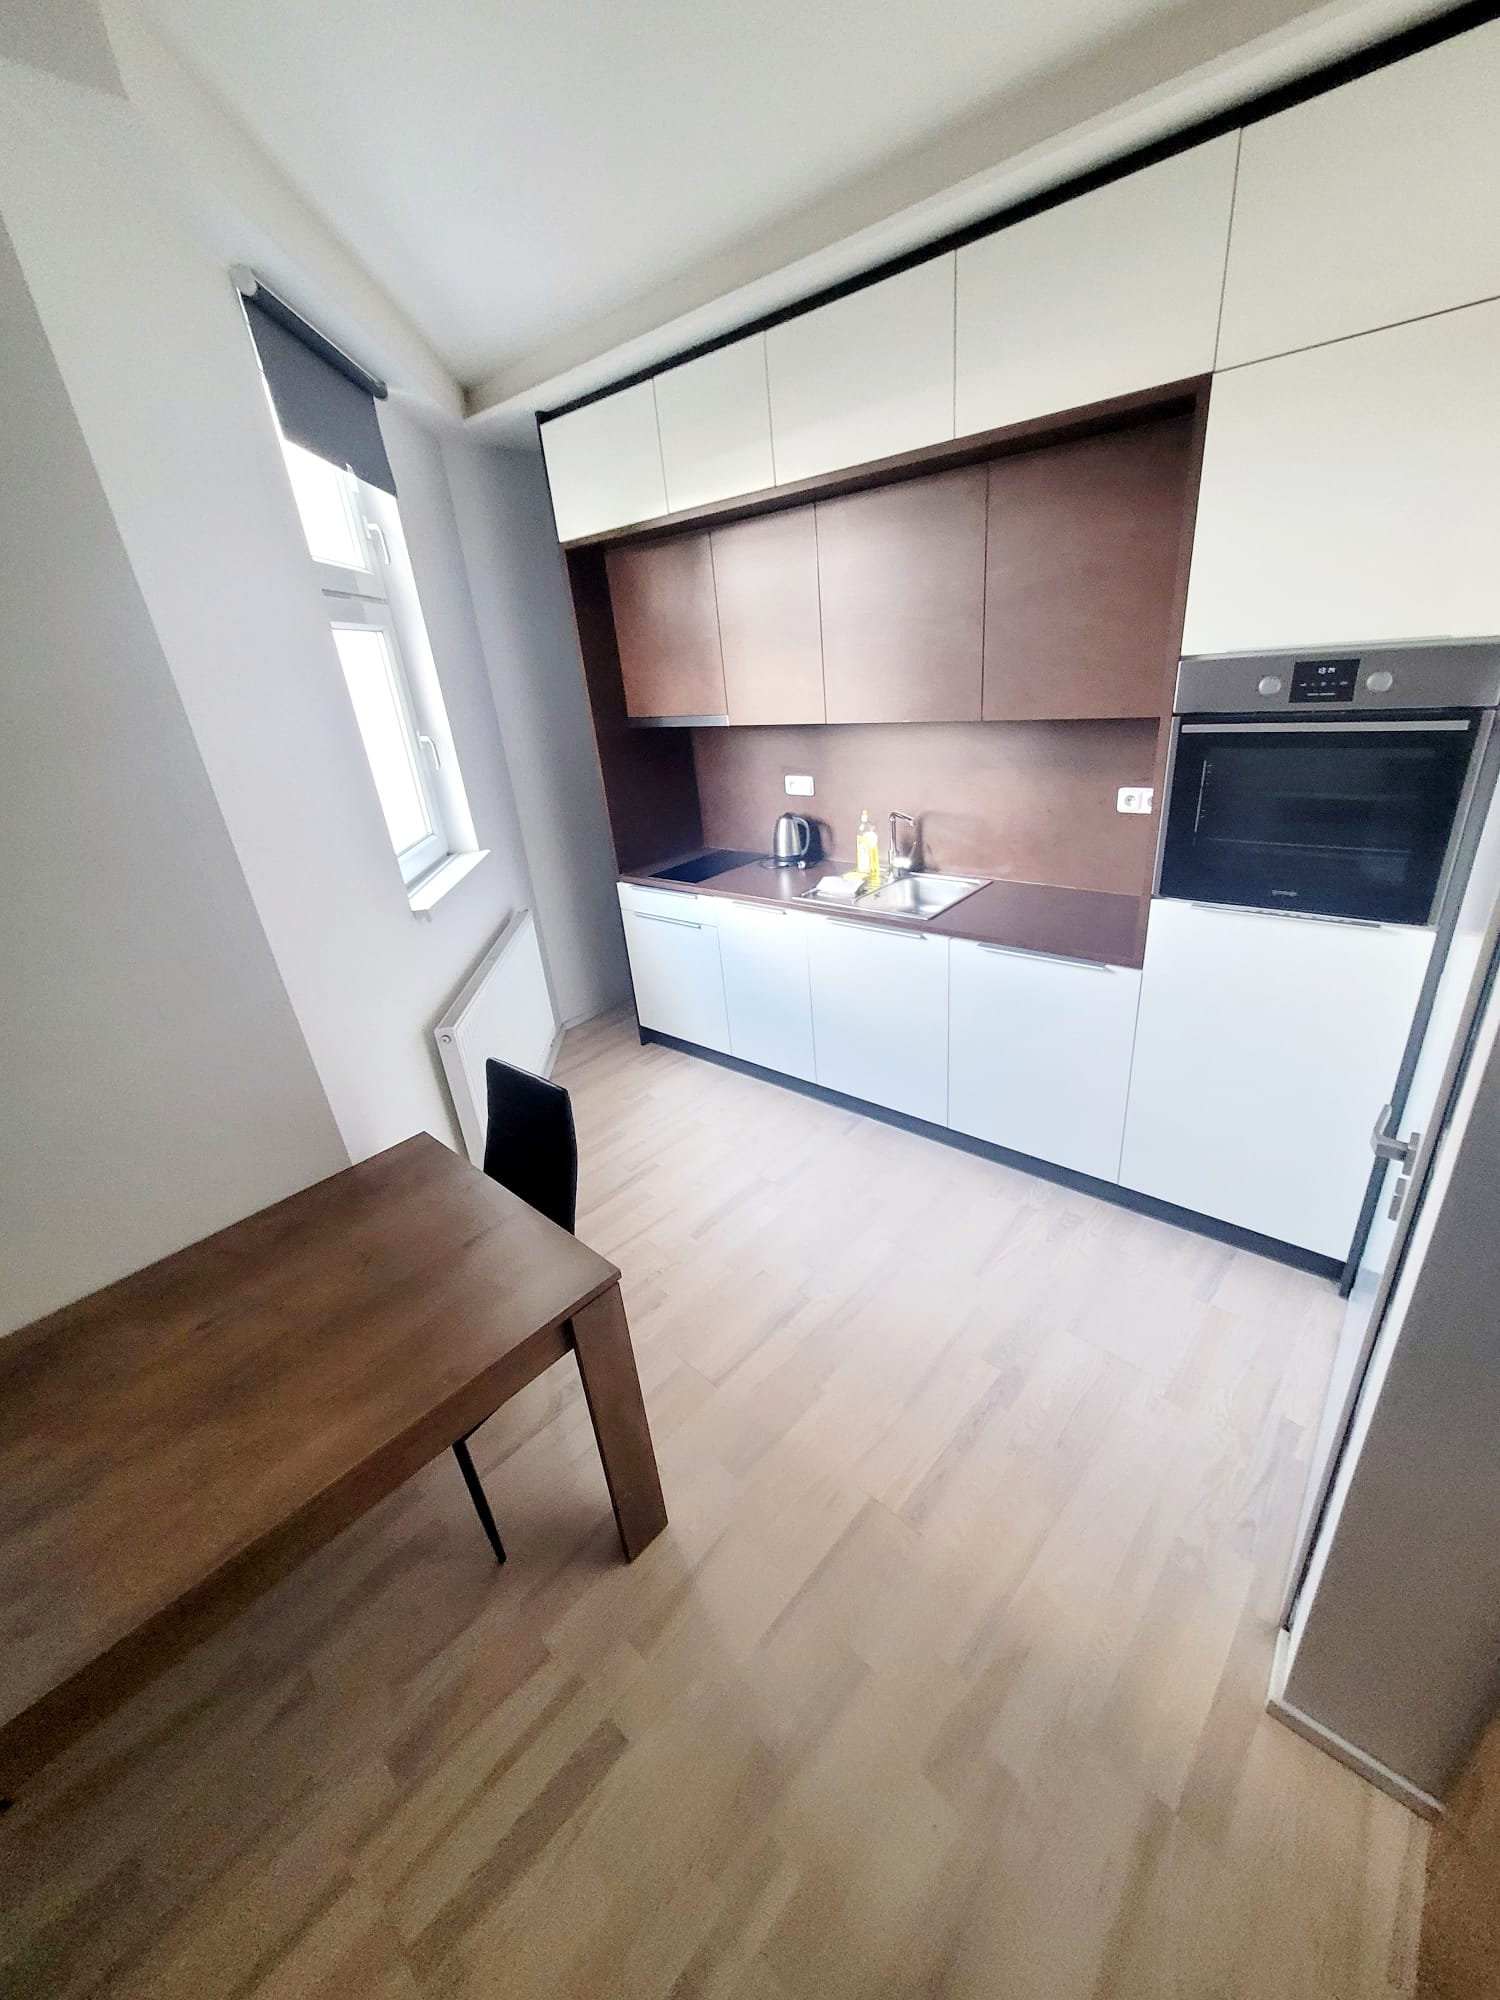 Apartmán Brno / Brno Apartment